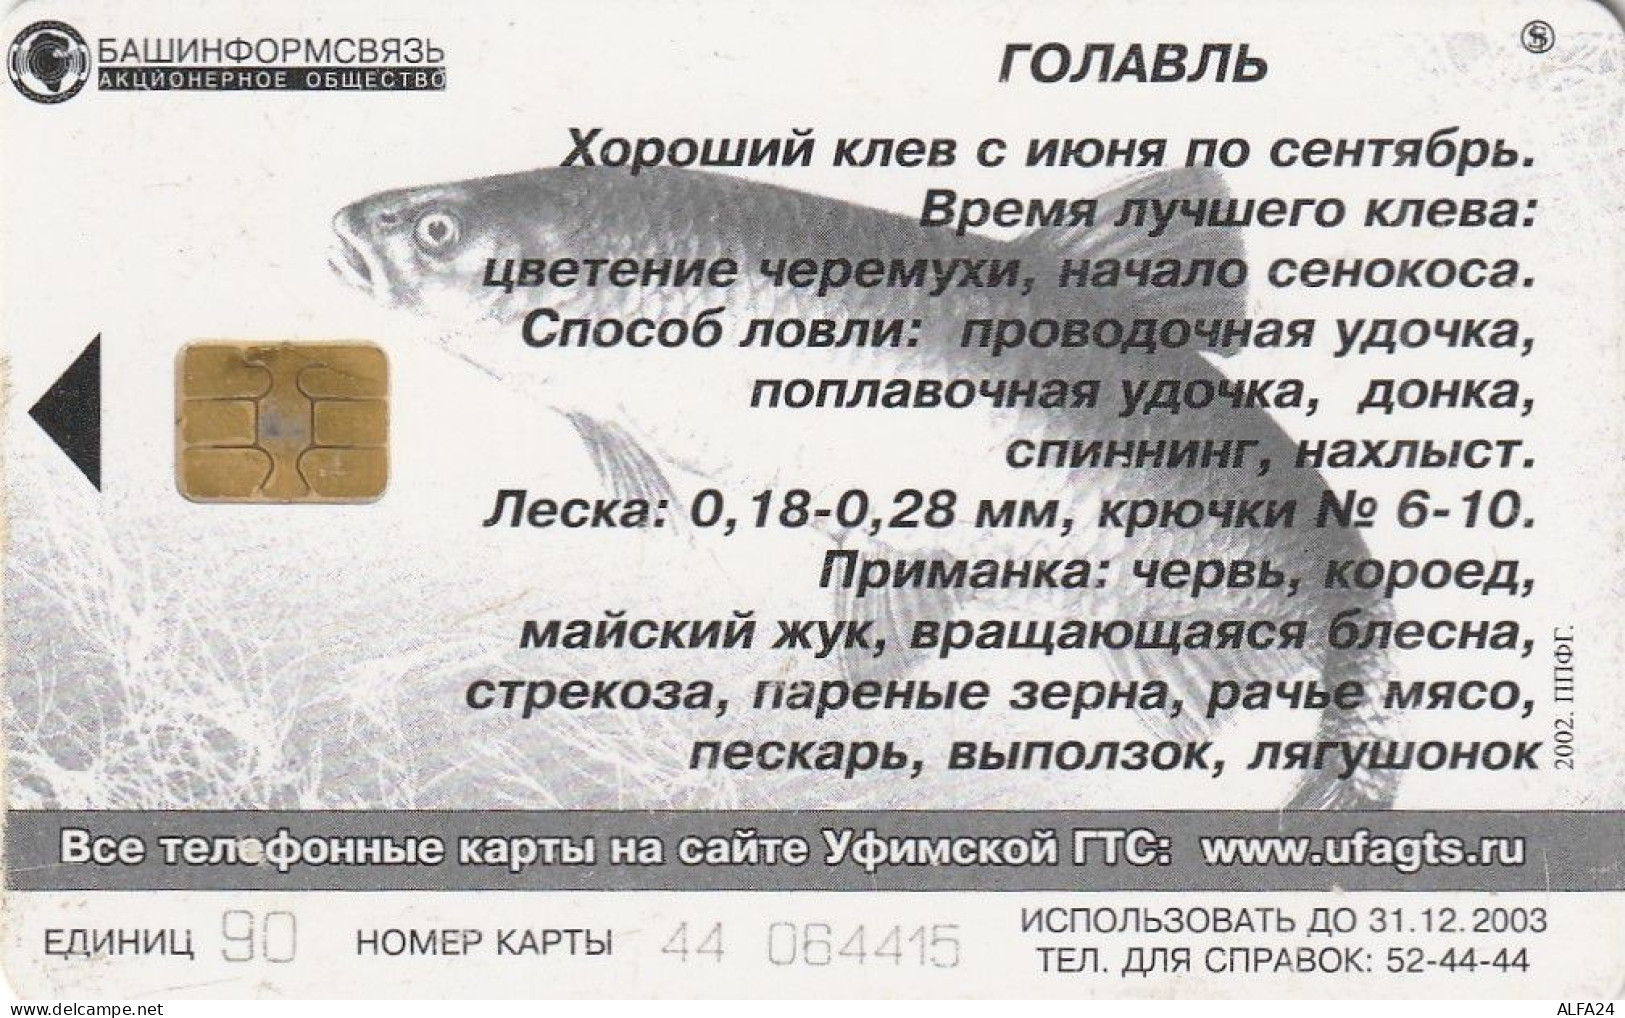 PHONE CARD RUSSIA Bashinformsvyaz - Ufa (E100.7.5 - Russie